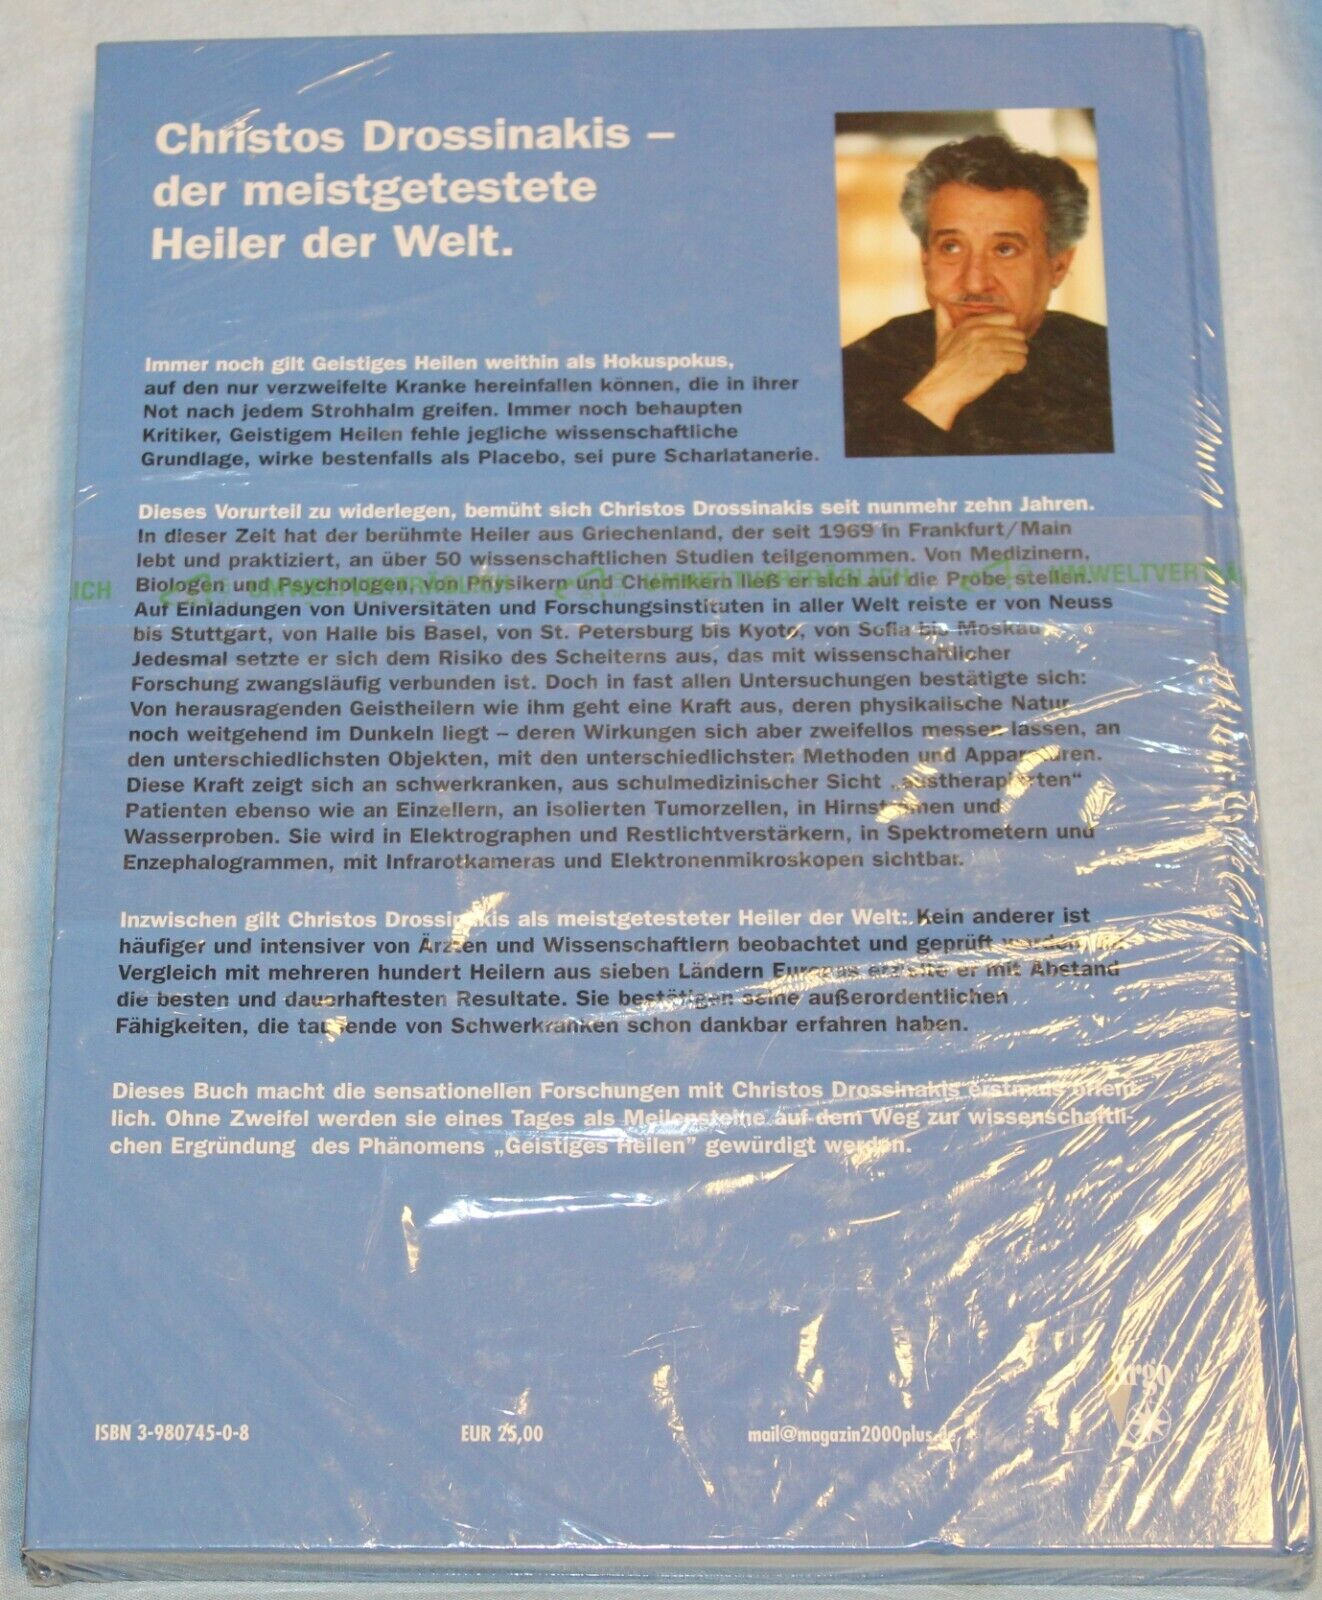 11371.Medical book: Hoffmann, Maren - Christos Drossinakis - Ein Geistheiler 2003